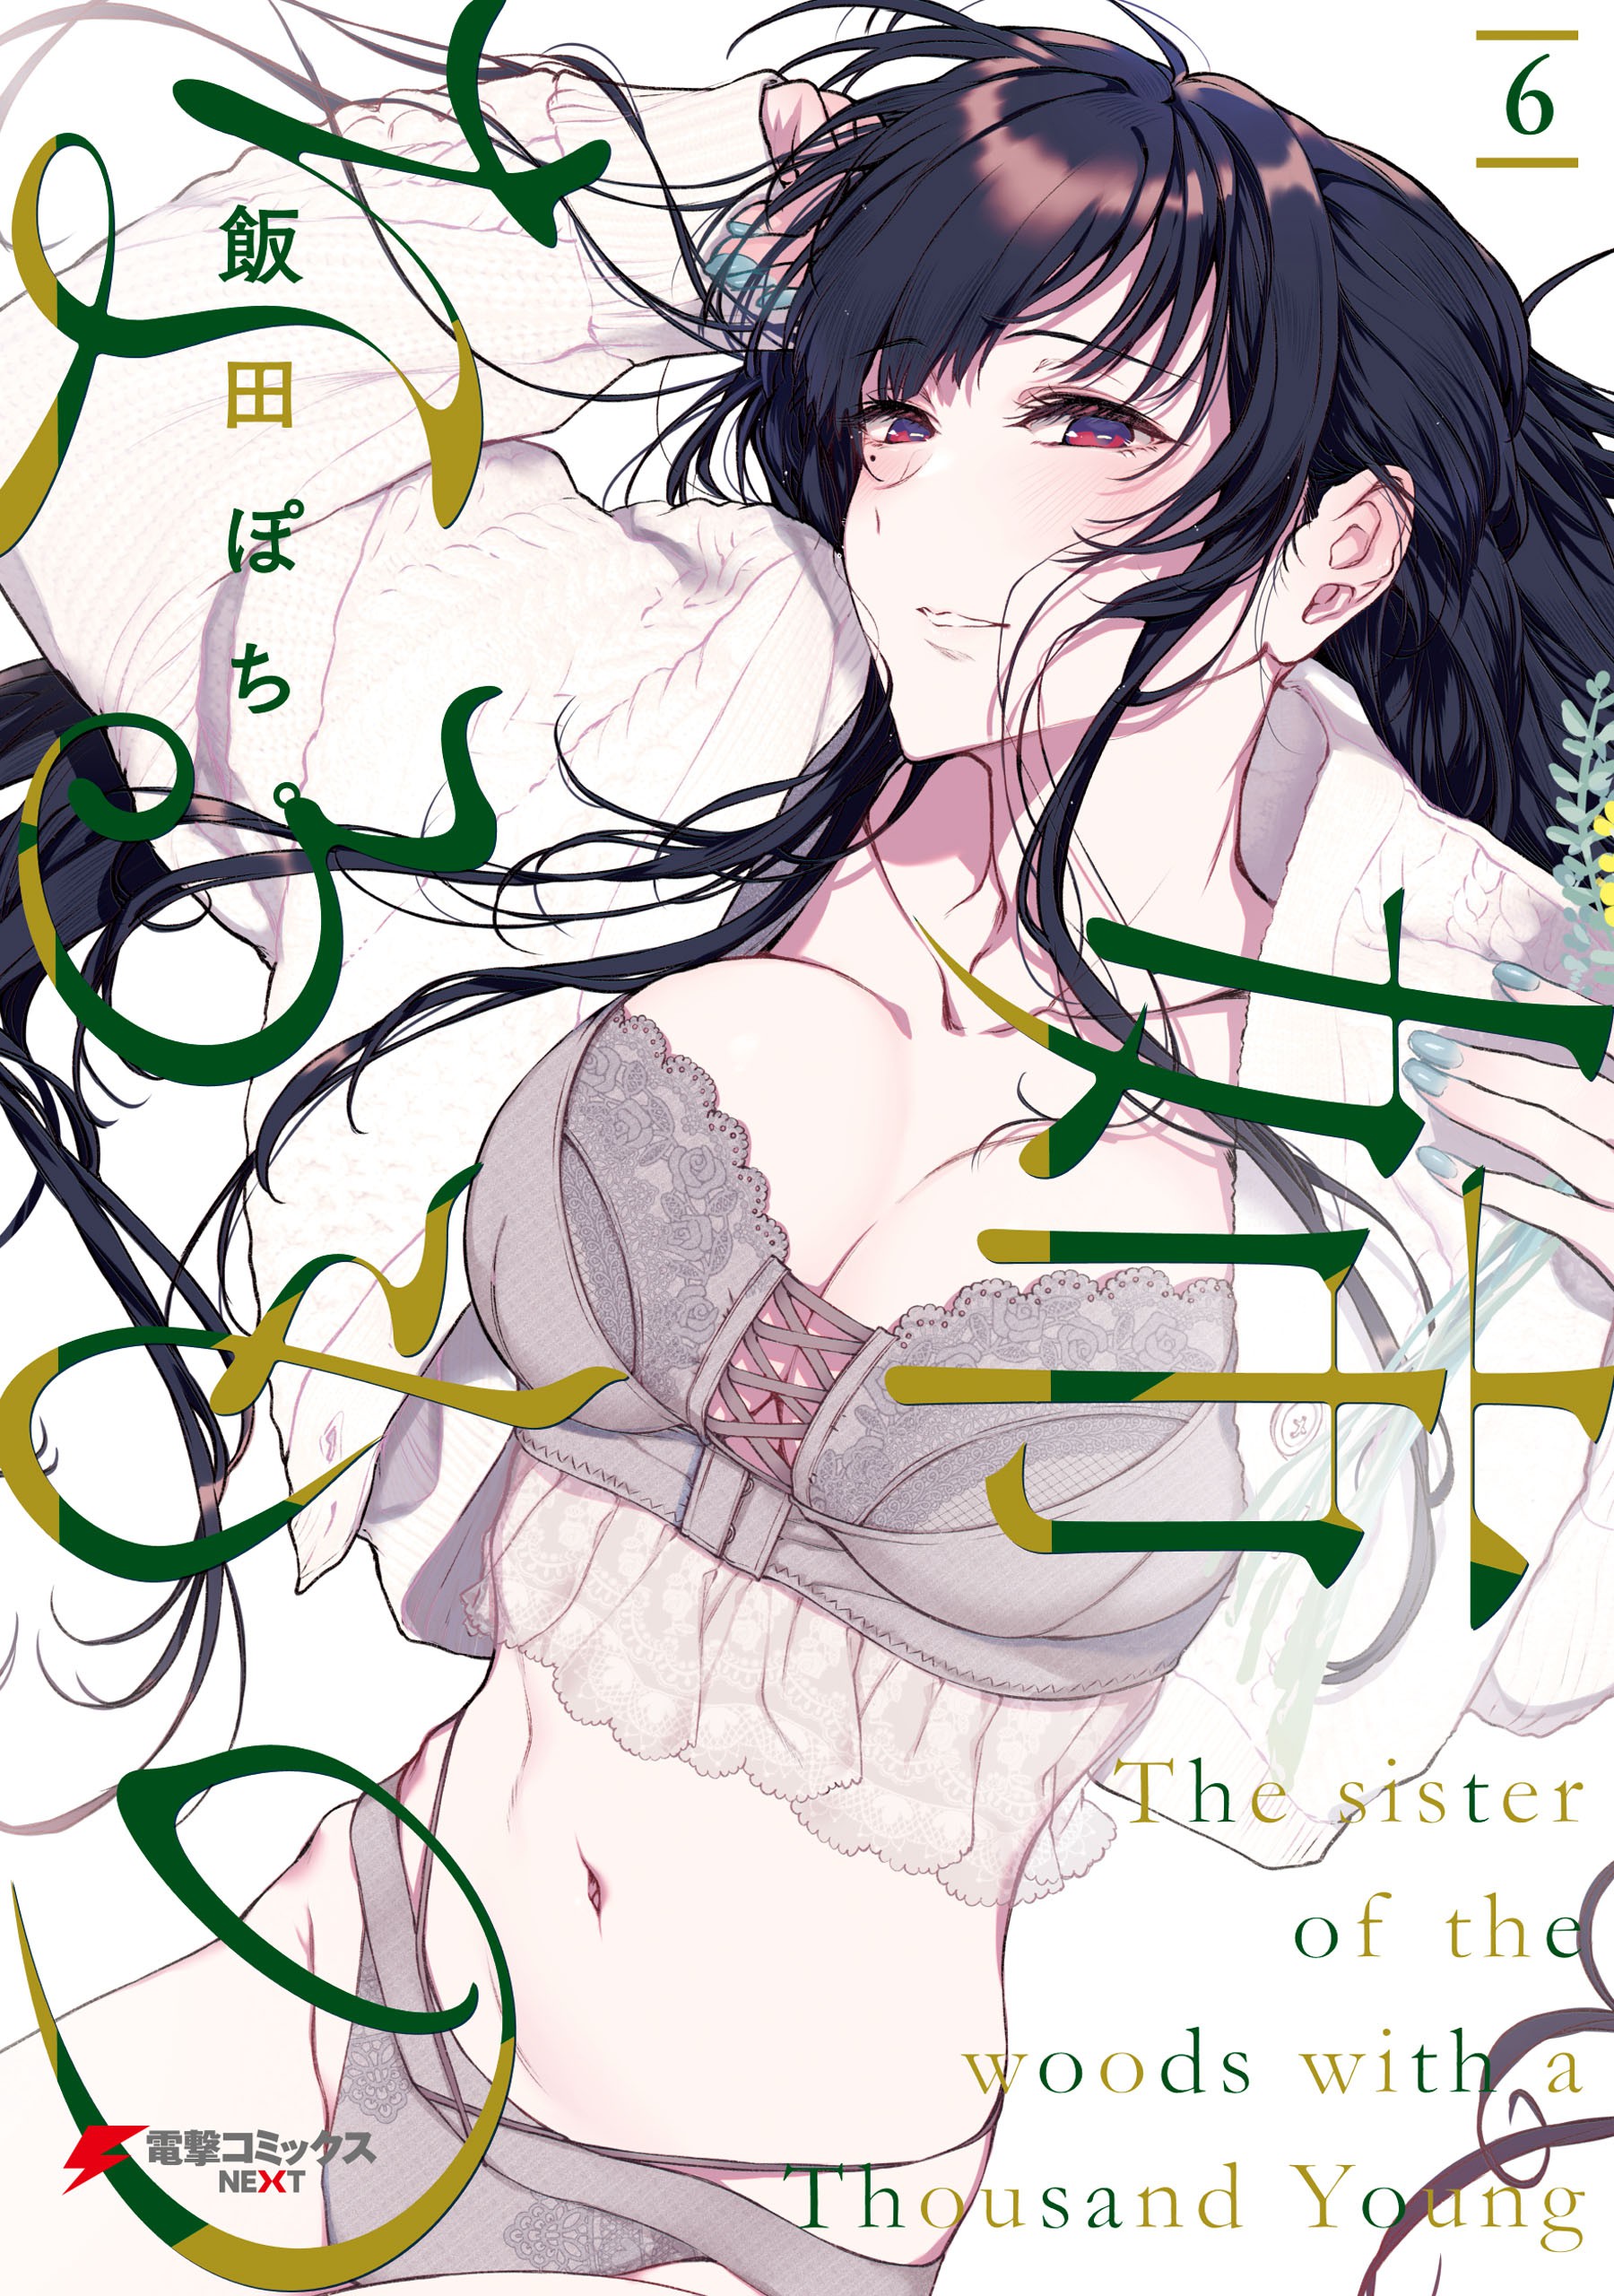 The sister of the woods with a Thousand Young  vol.1   Dengeki Comics Manga